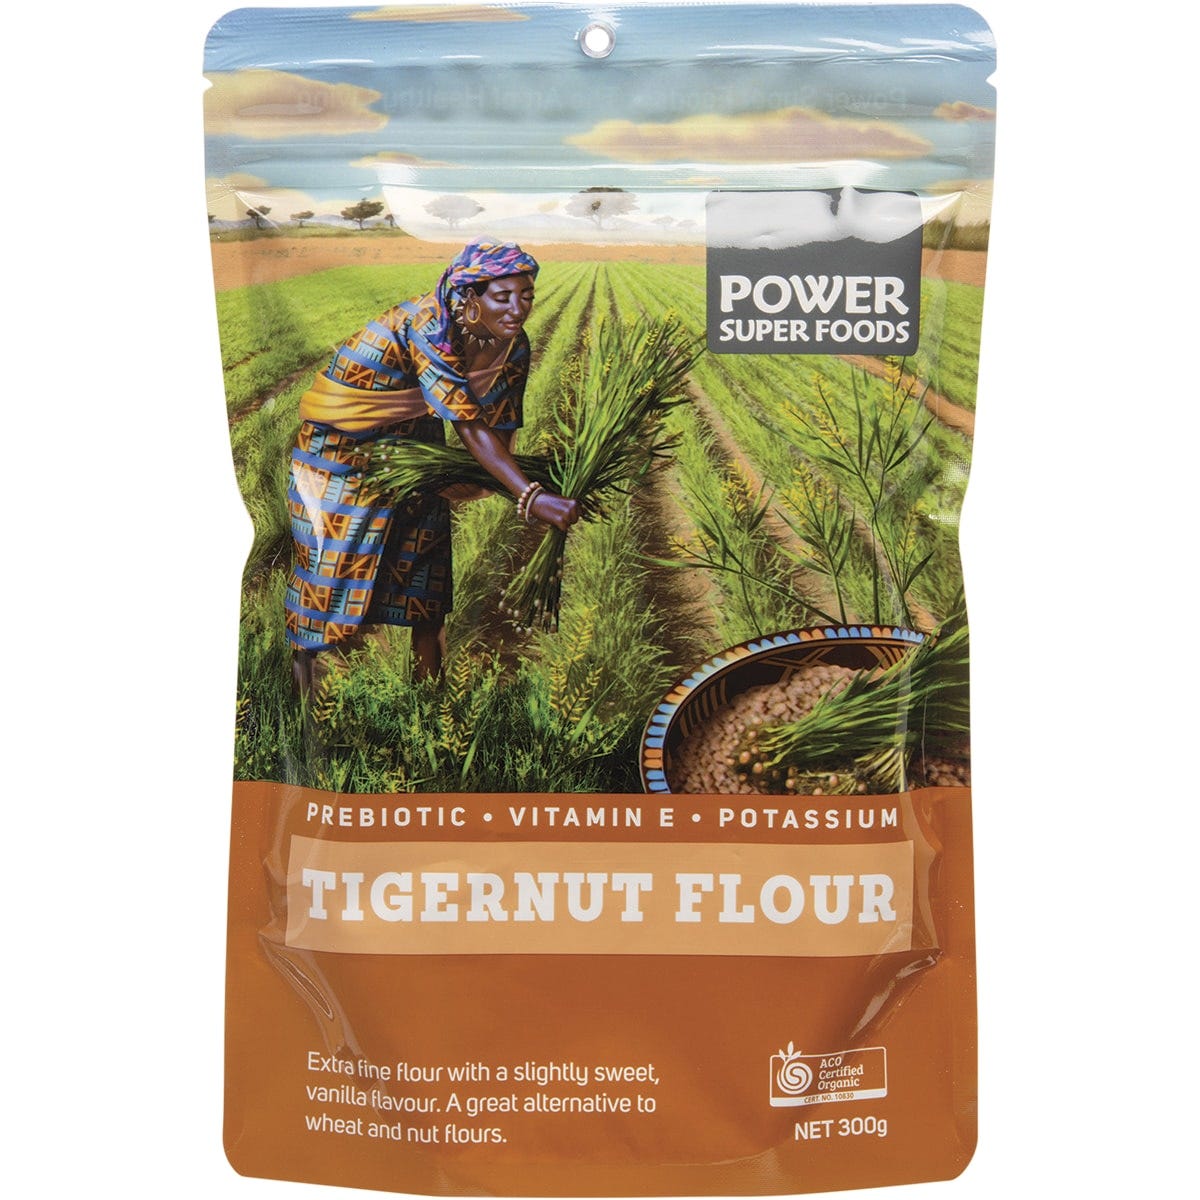 Power Super Foods Tigernut Flour The Origin Series 300g - Dr Earth - Baking